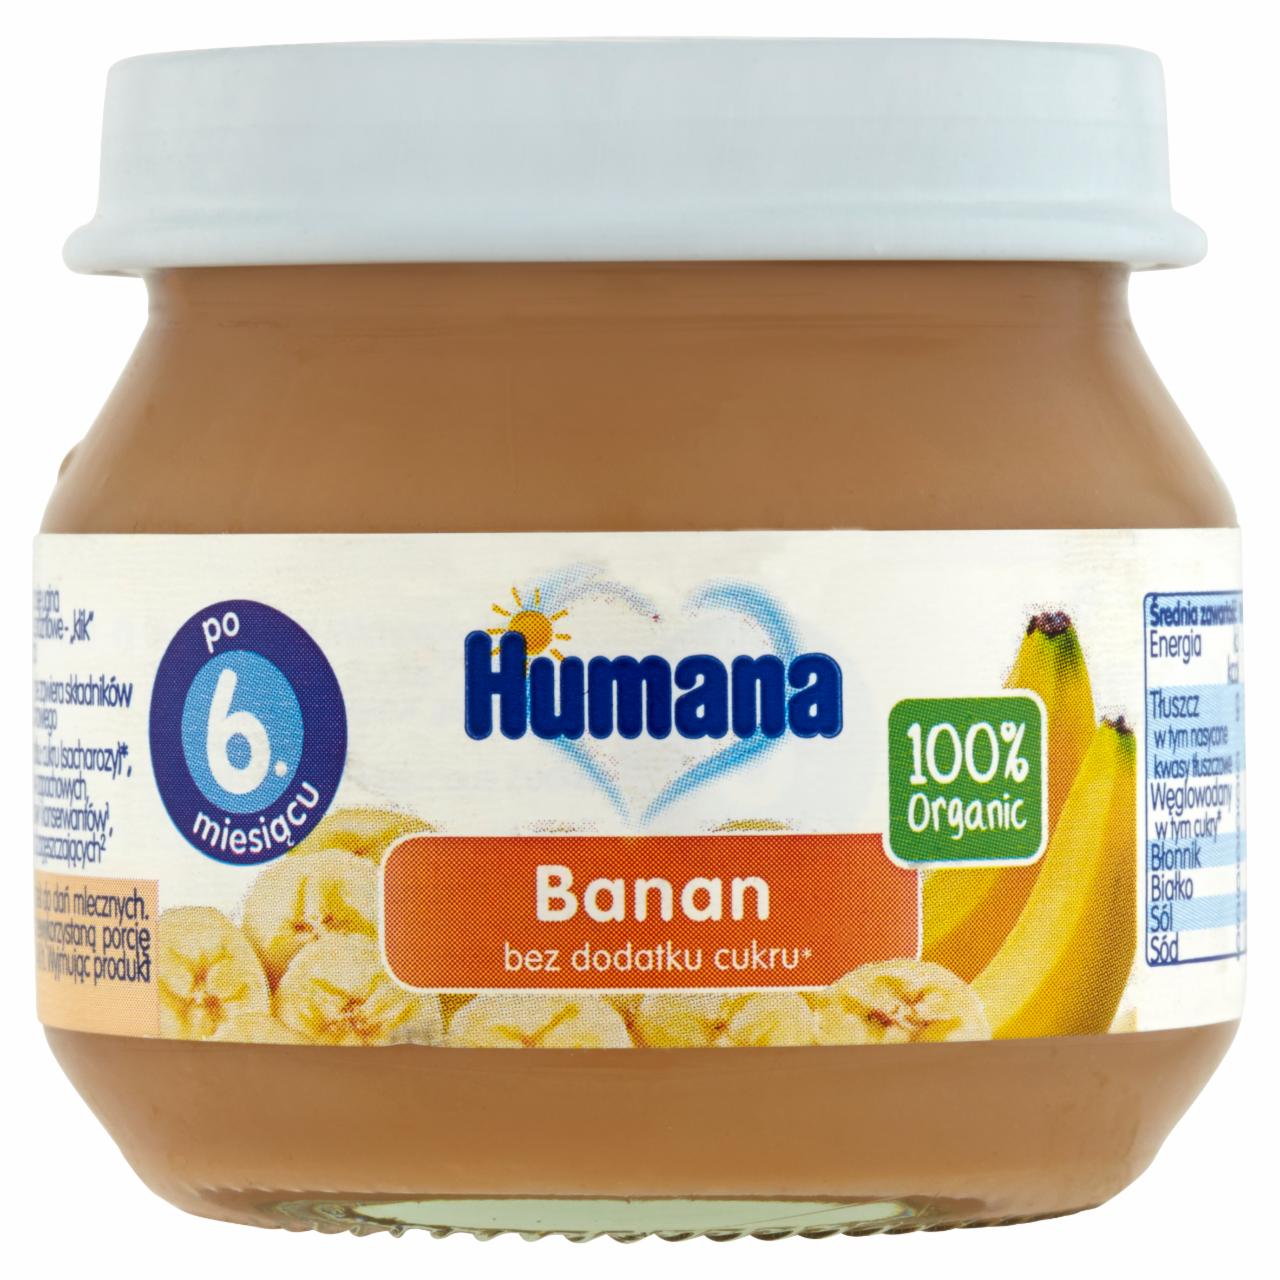 Zdjęcia - Humana 100% Organic Banan po 6. miesiącu 80 g